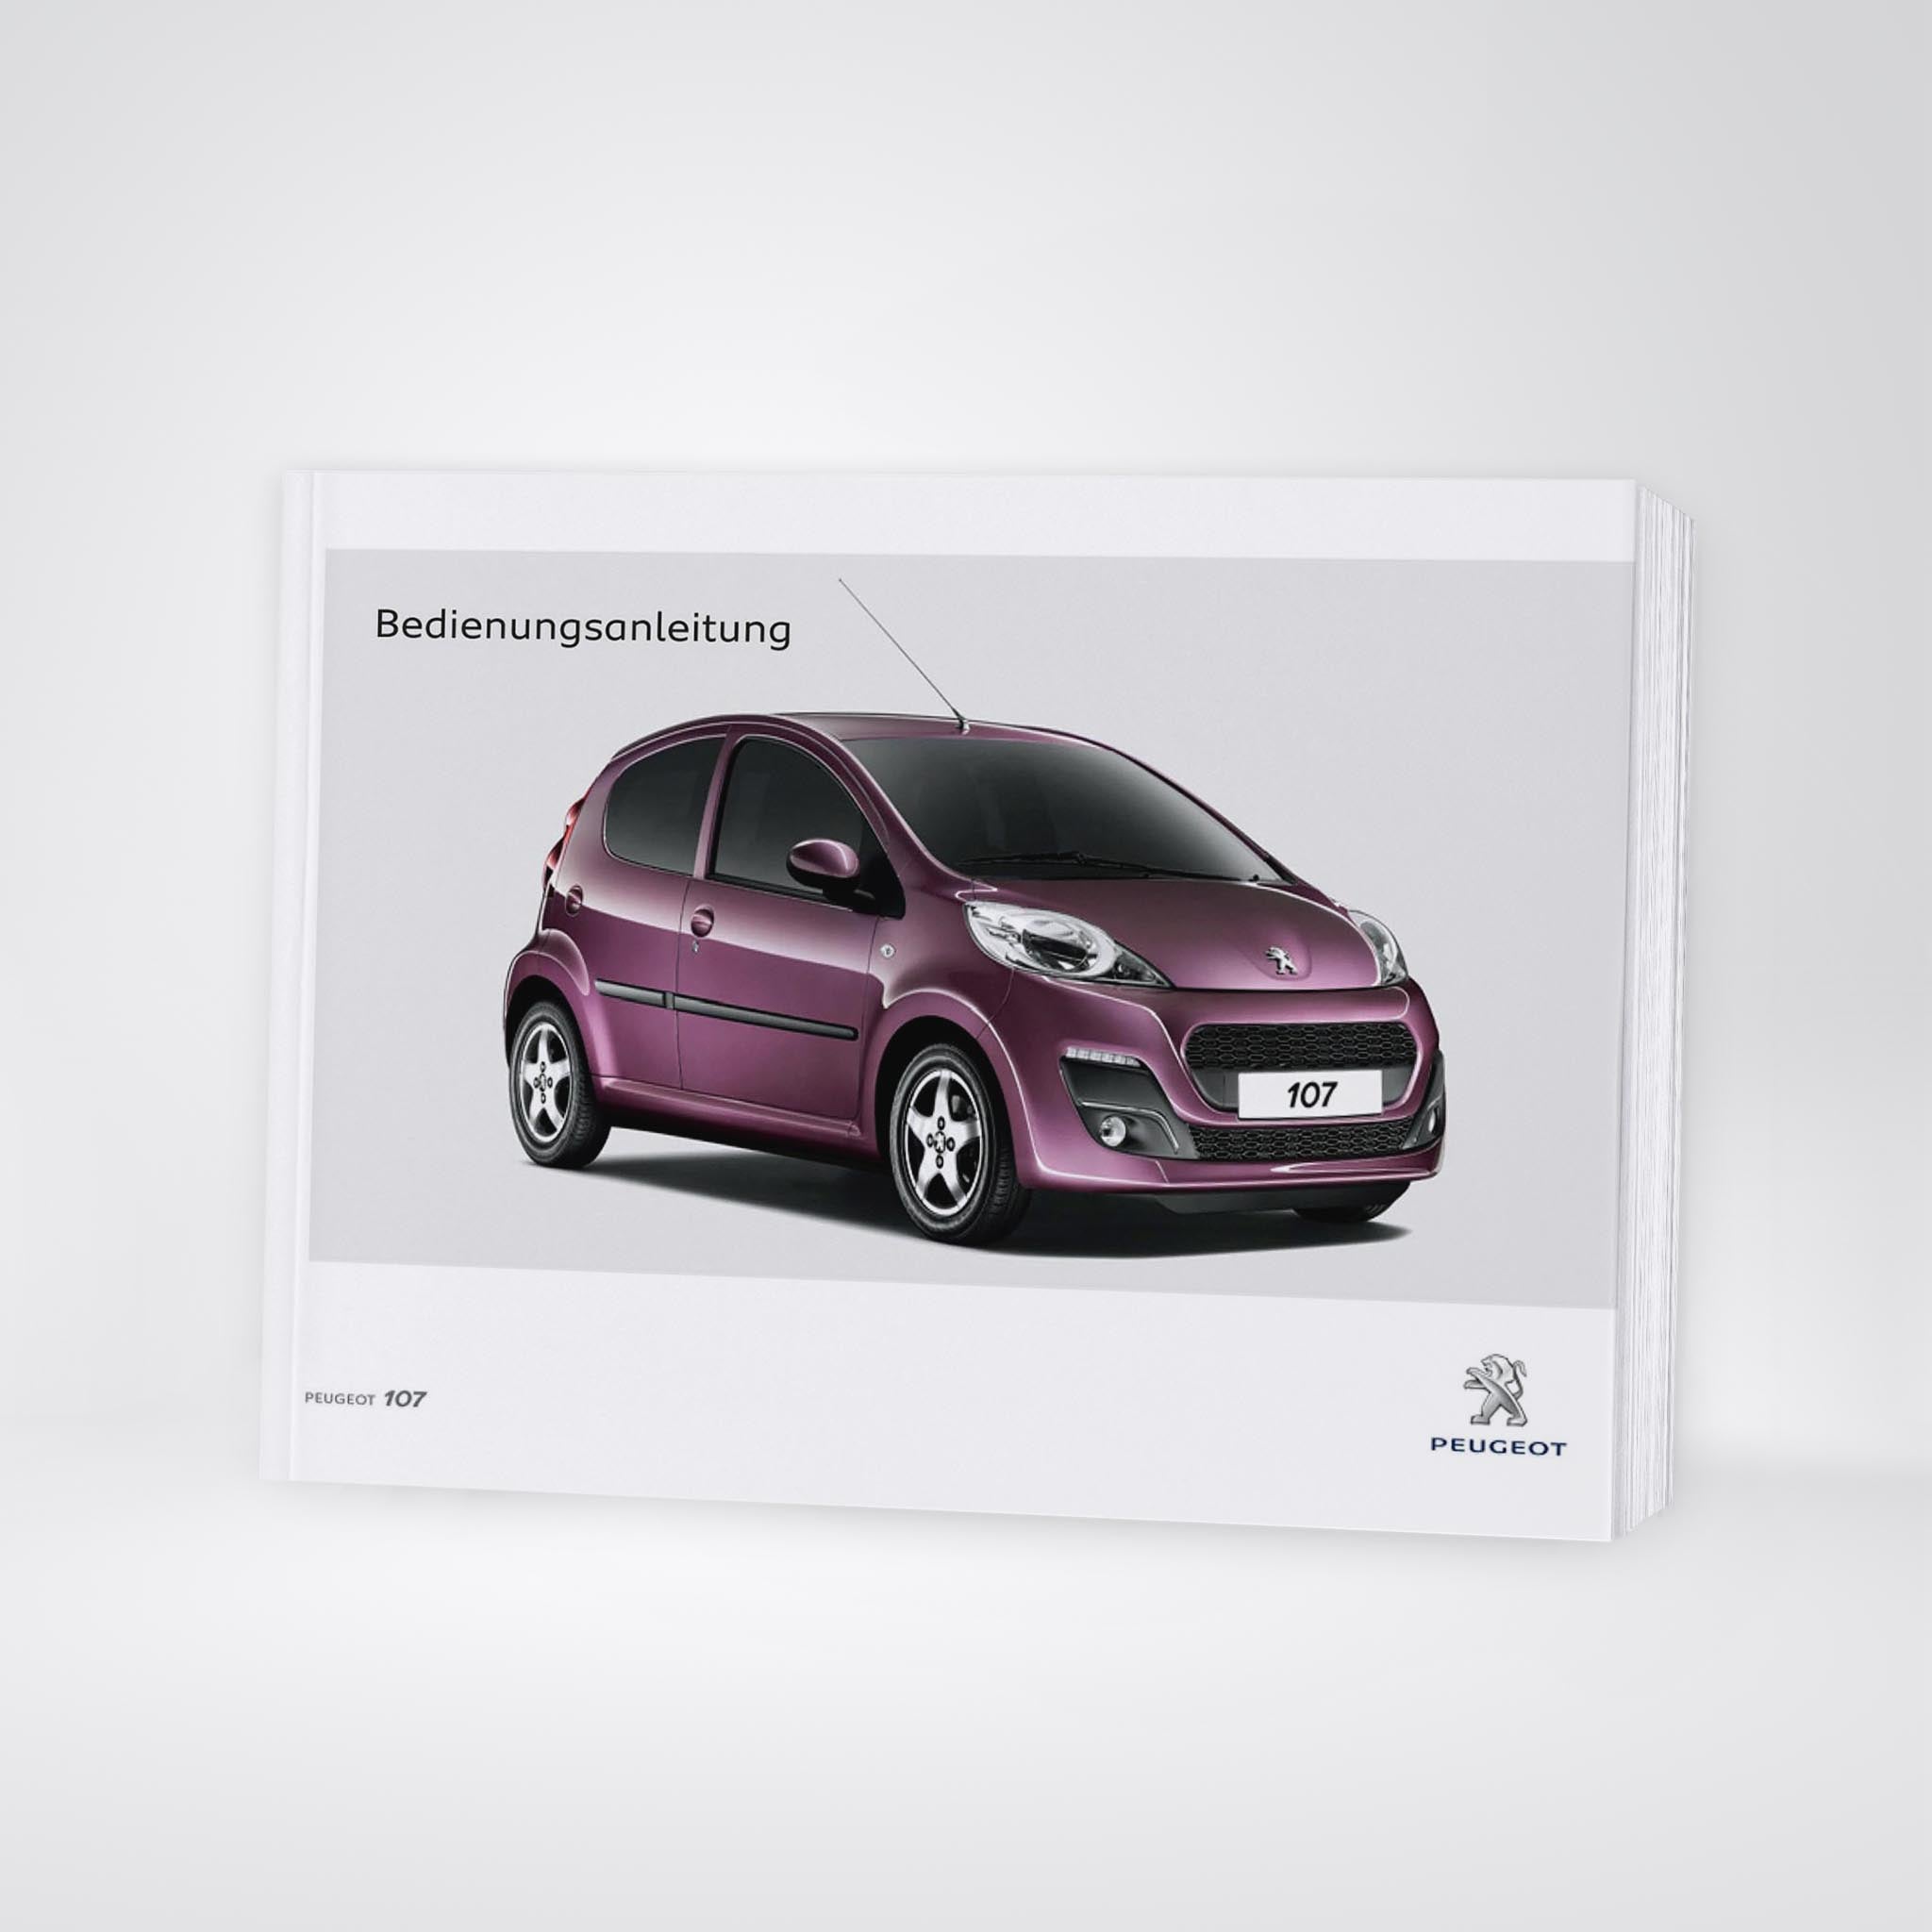 2012-2014 Peugeot 107 Bedienungsanleitung